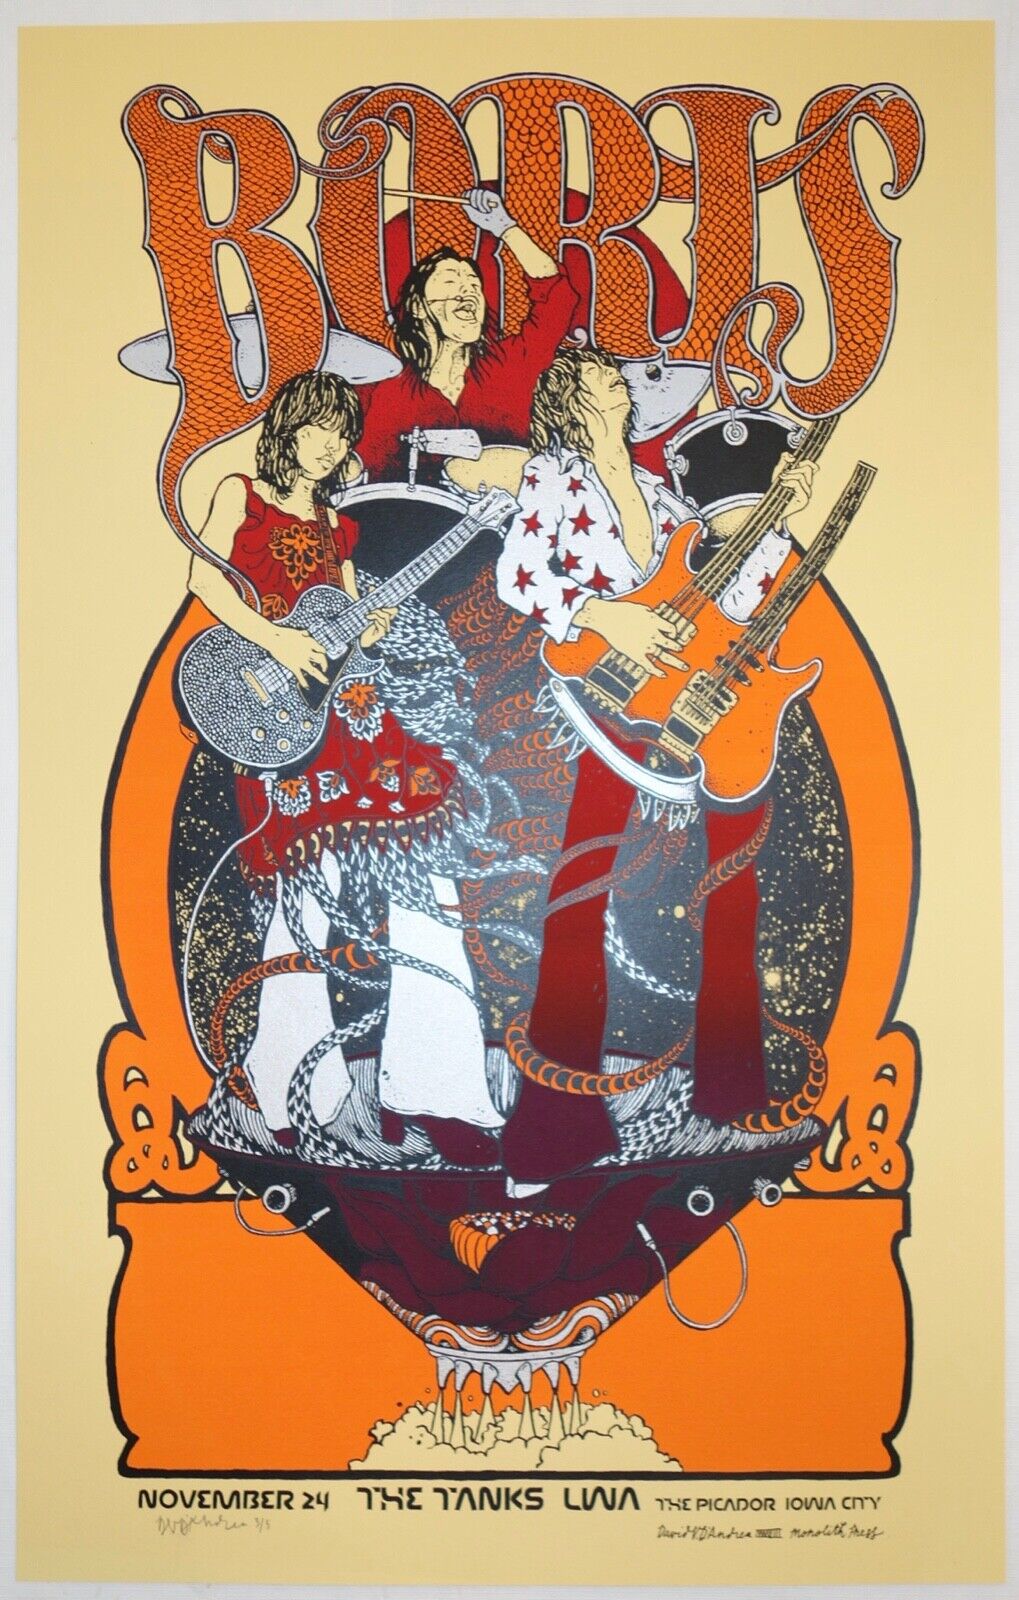 2008 Boris - Iowa City Yellow Variant Concert Poster S/n By David D'andrea